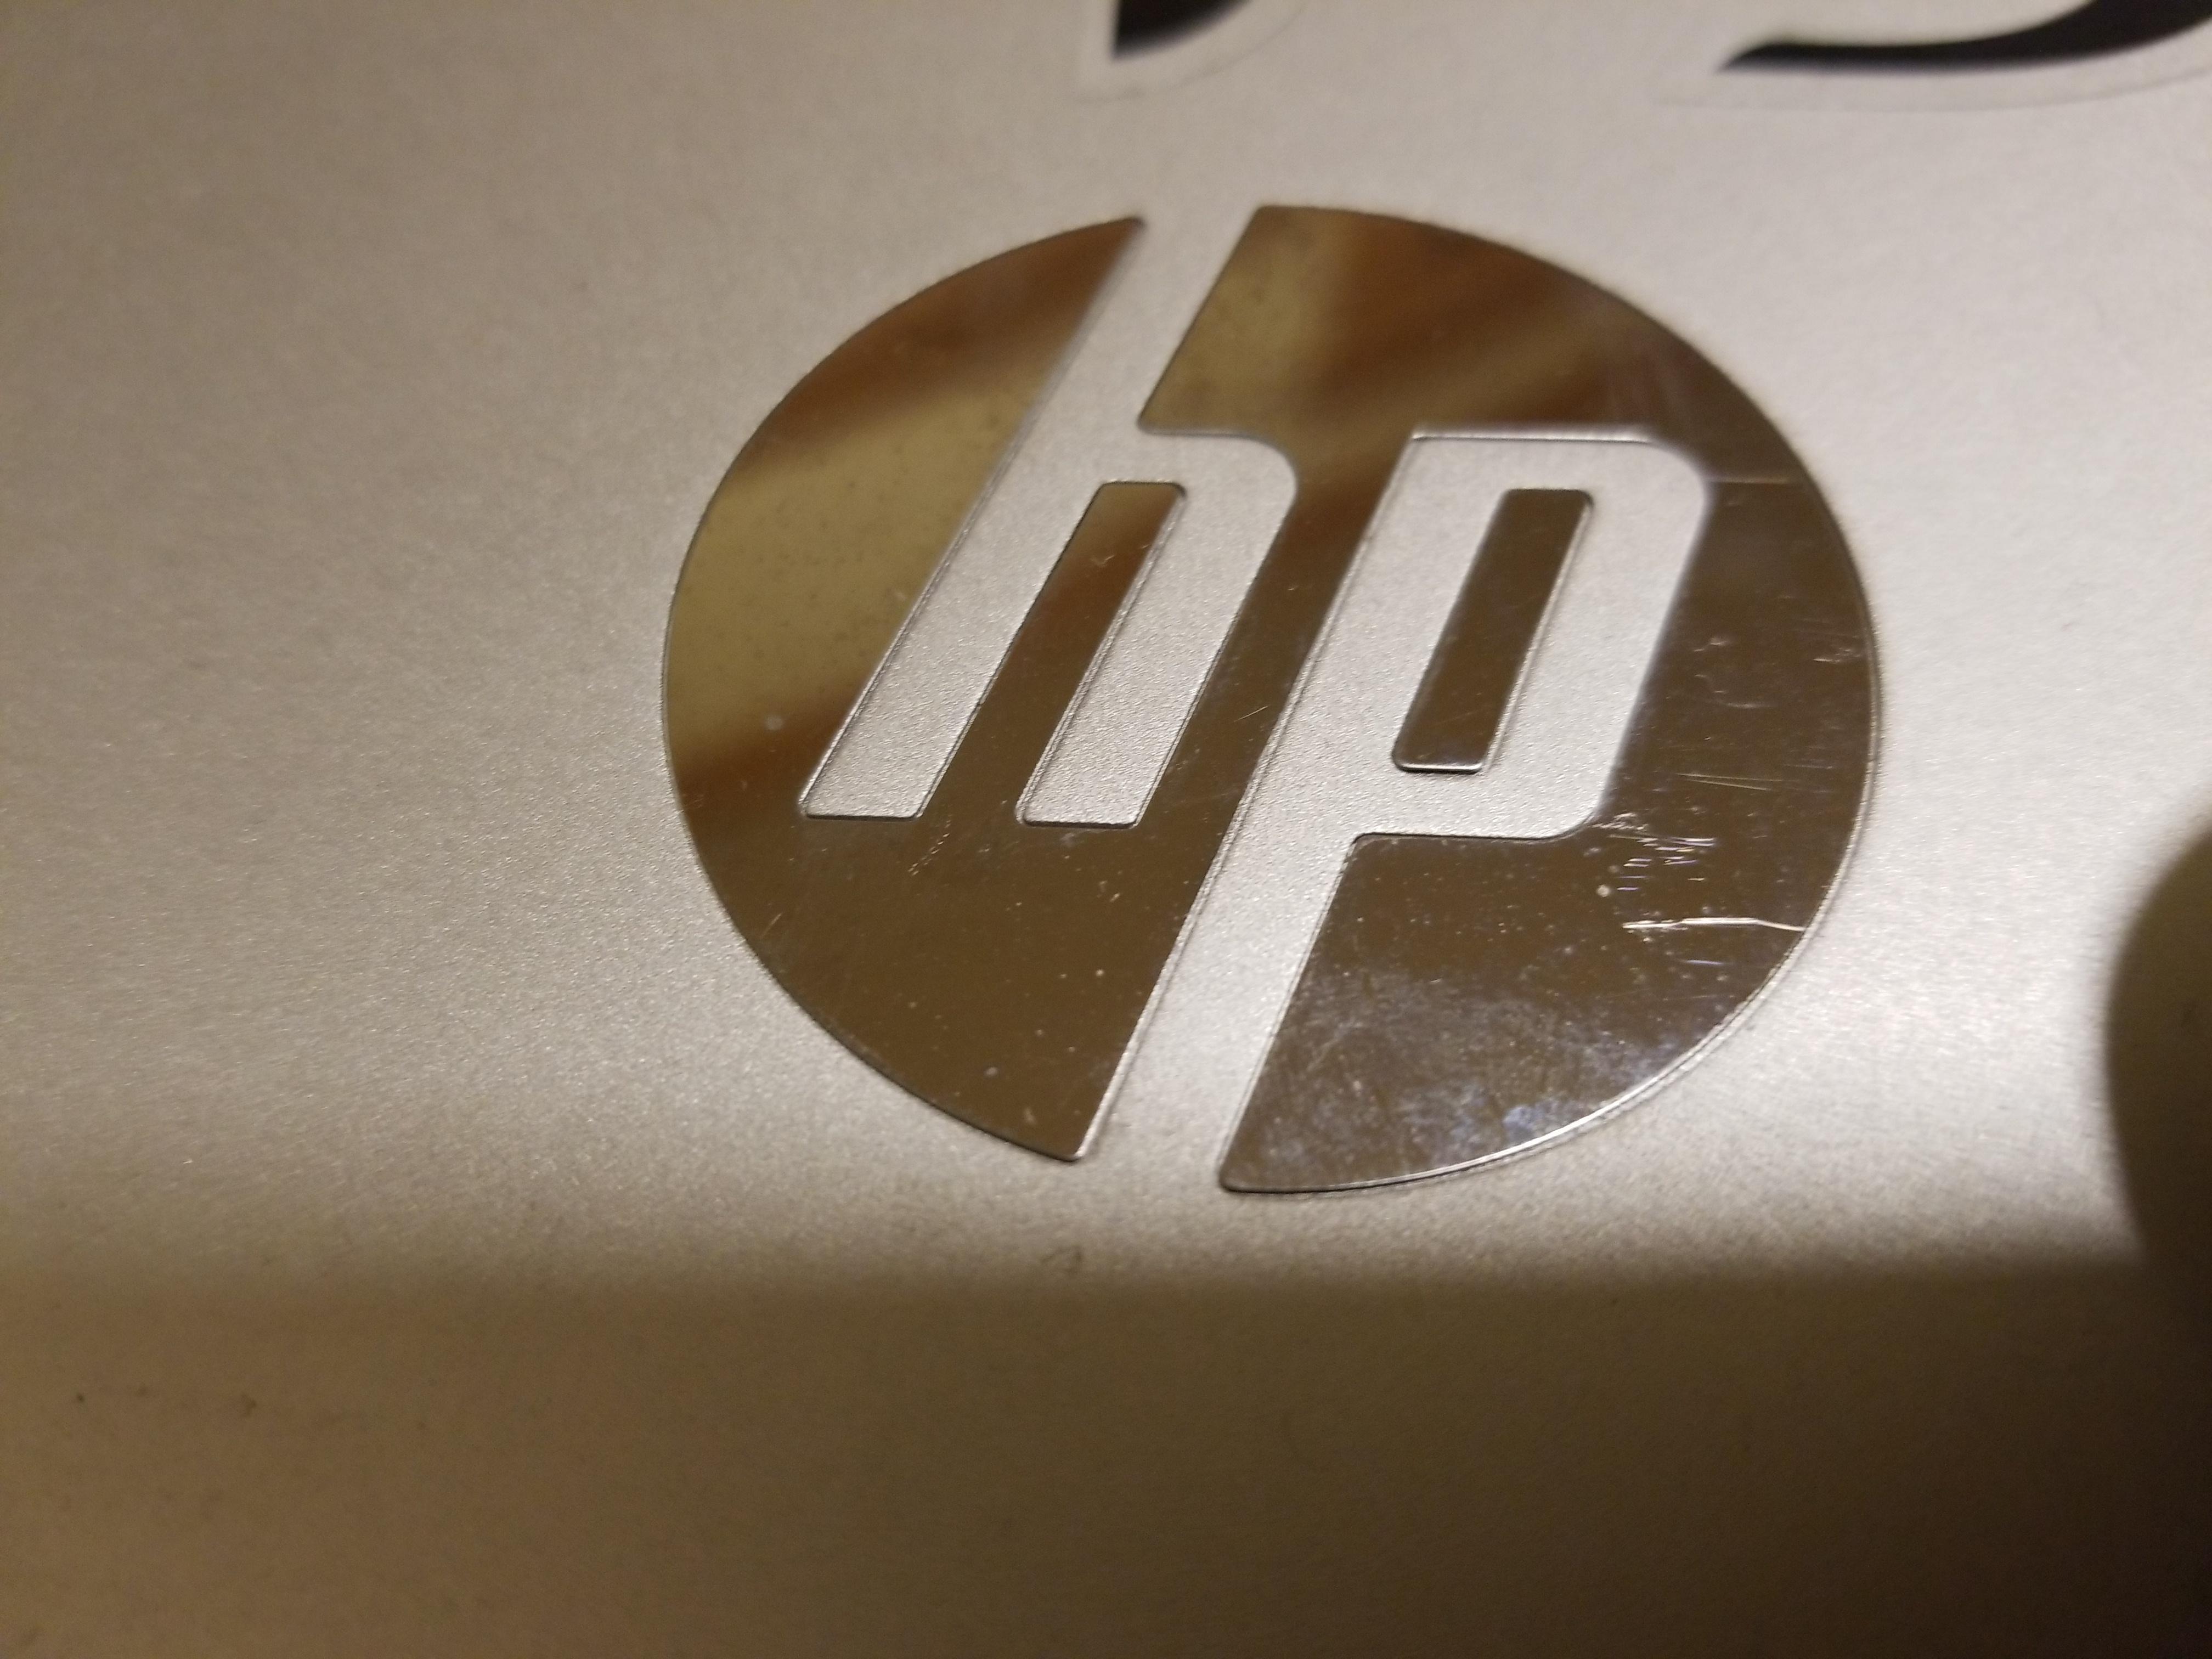 HP Laptop Logo - My HP laptop has a HP logo on it